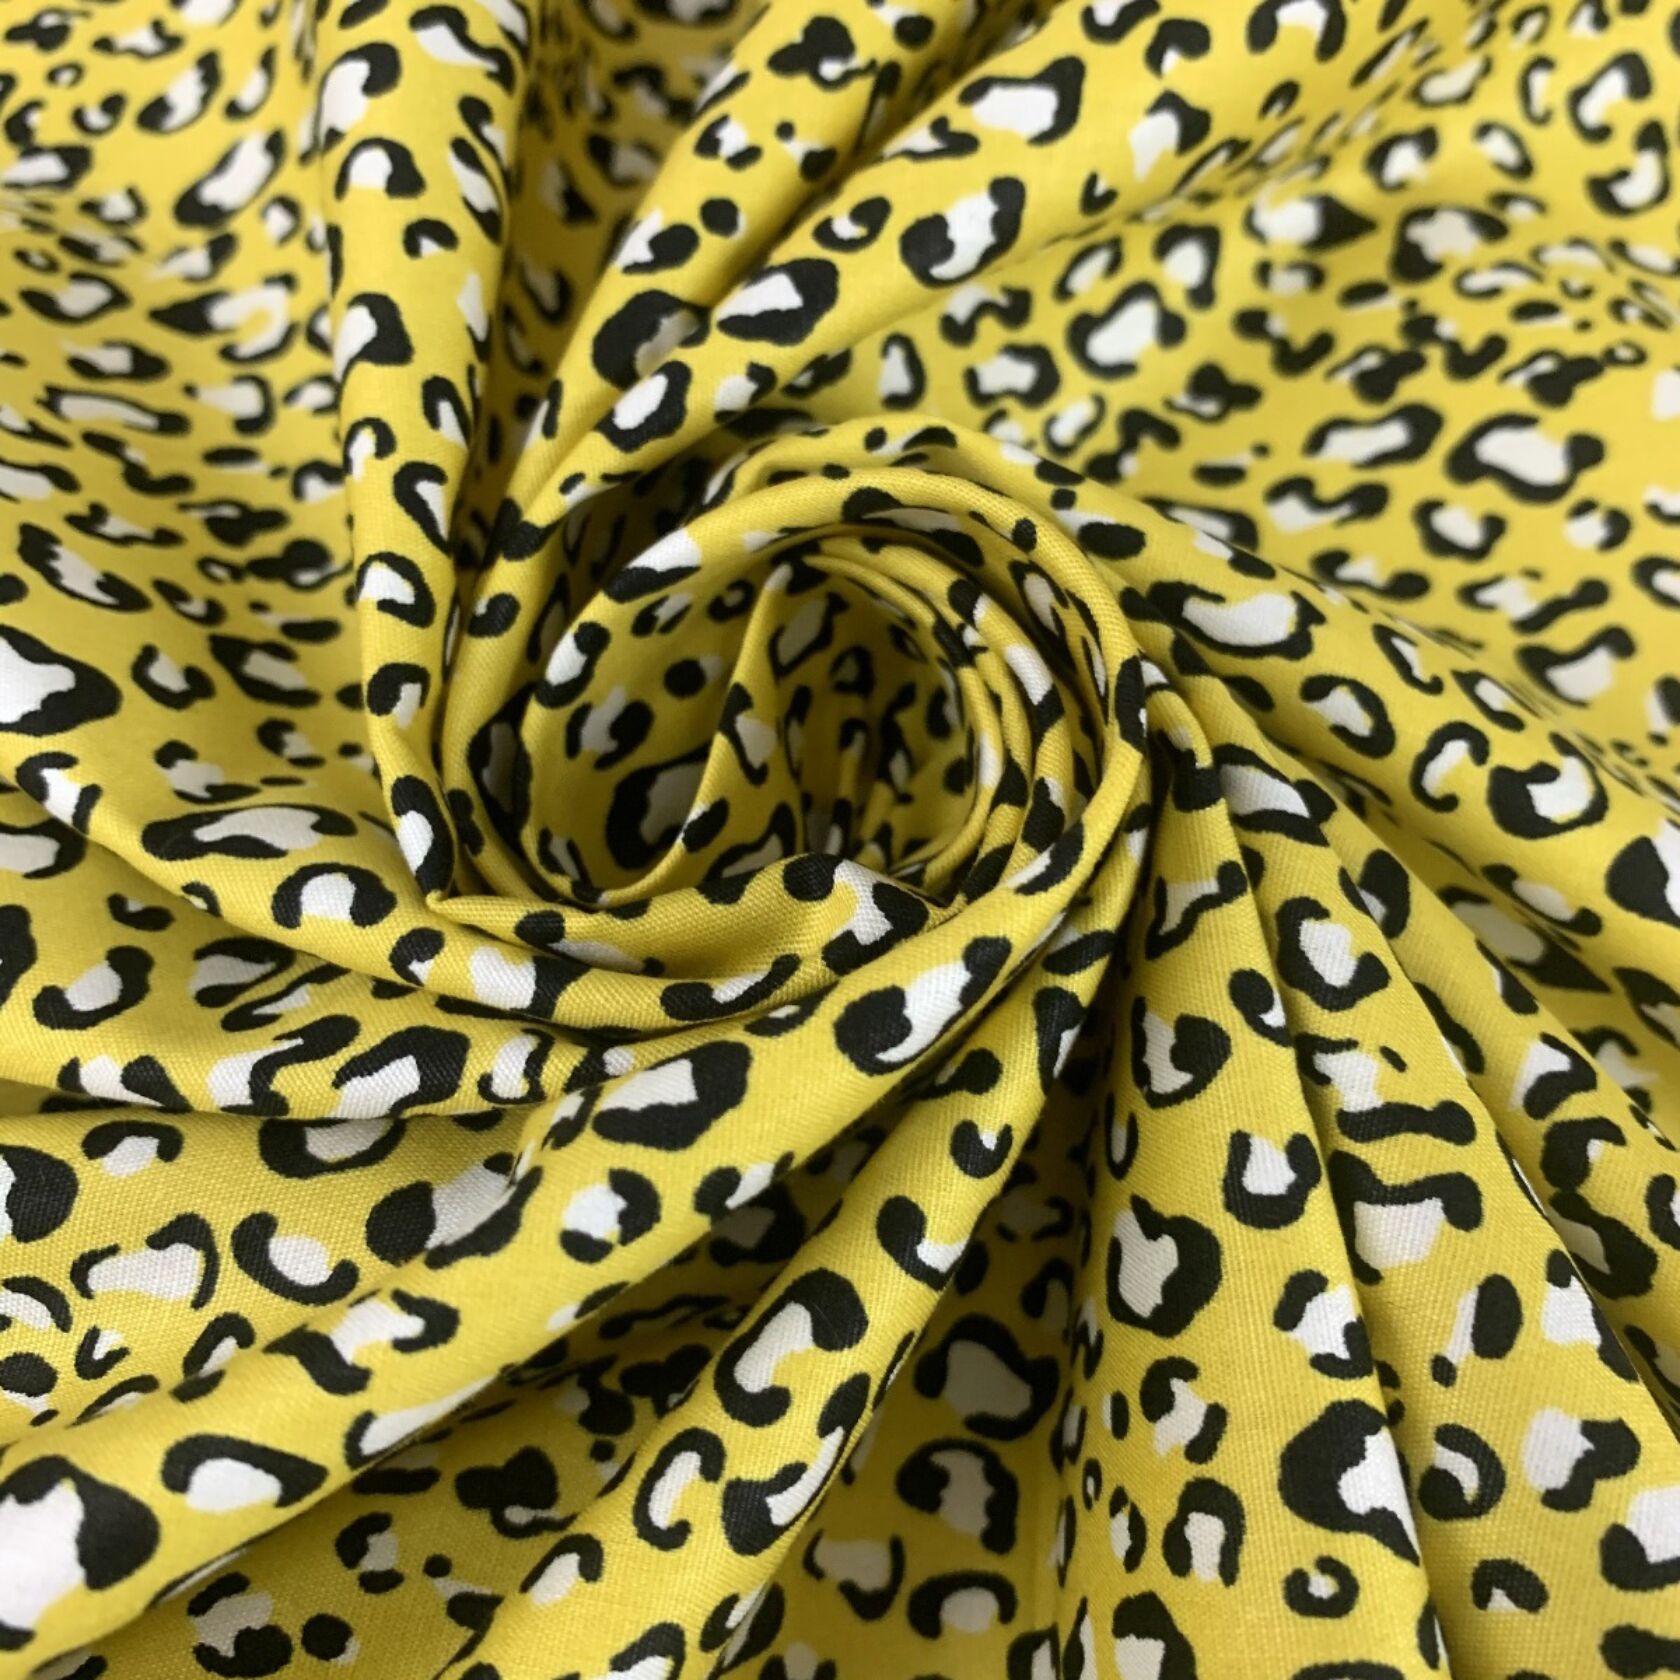 Fabric, Scuba Print Fabric, Leopard Print Scuba Fabric per 1/2